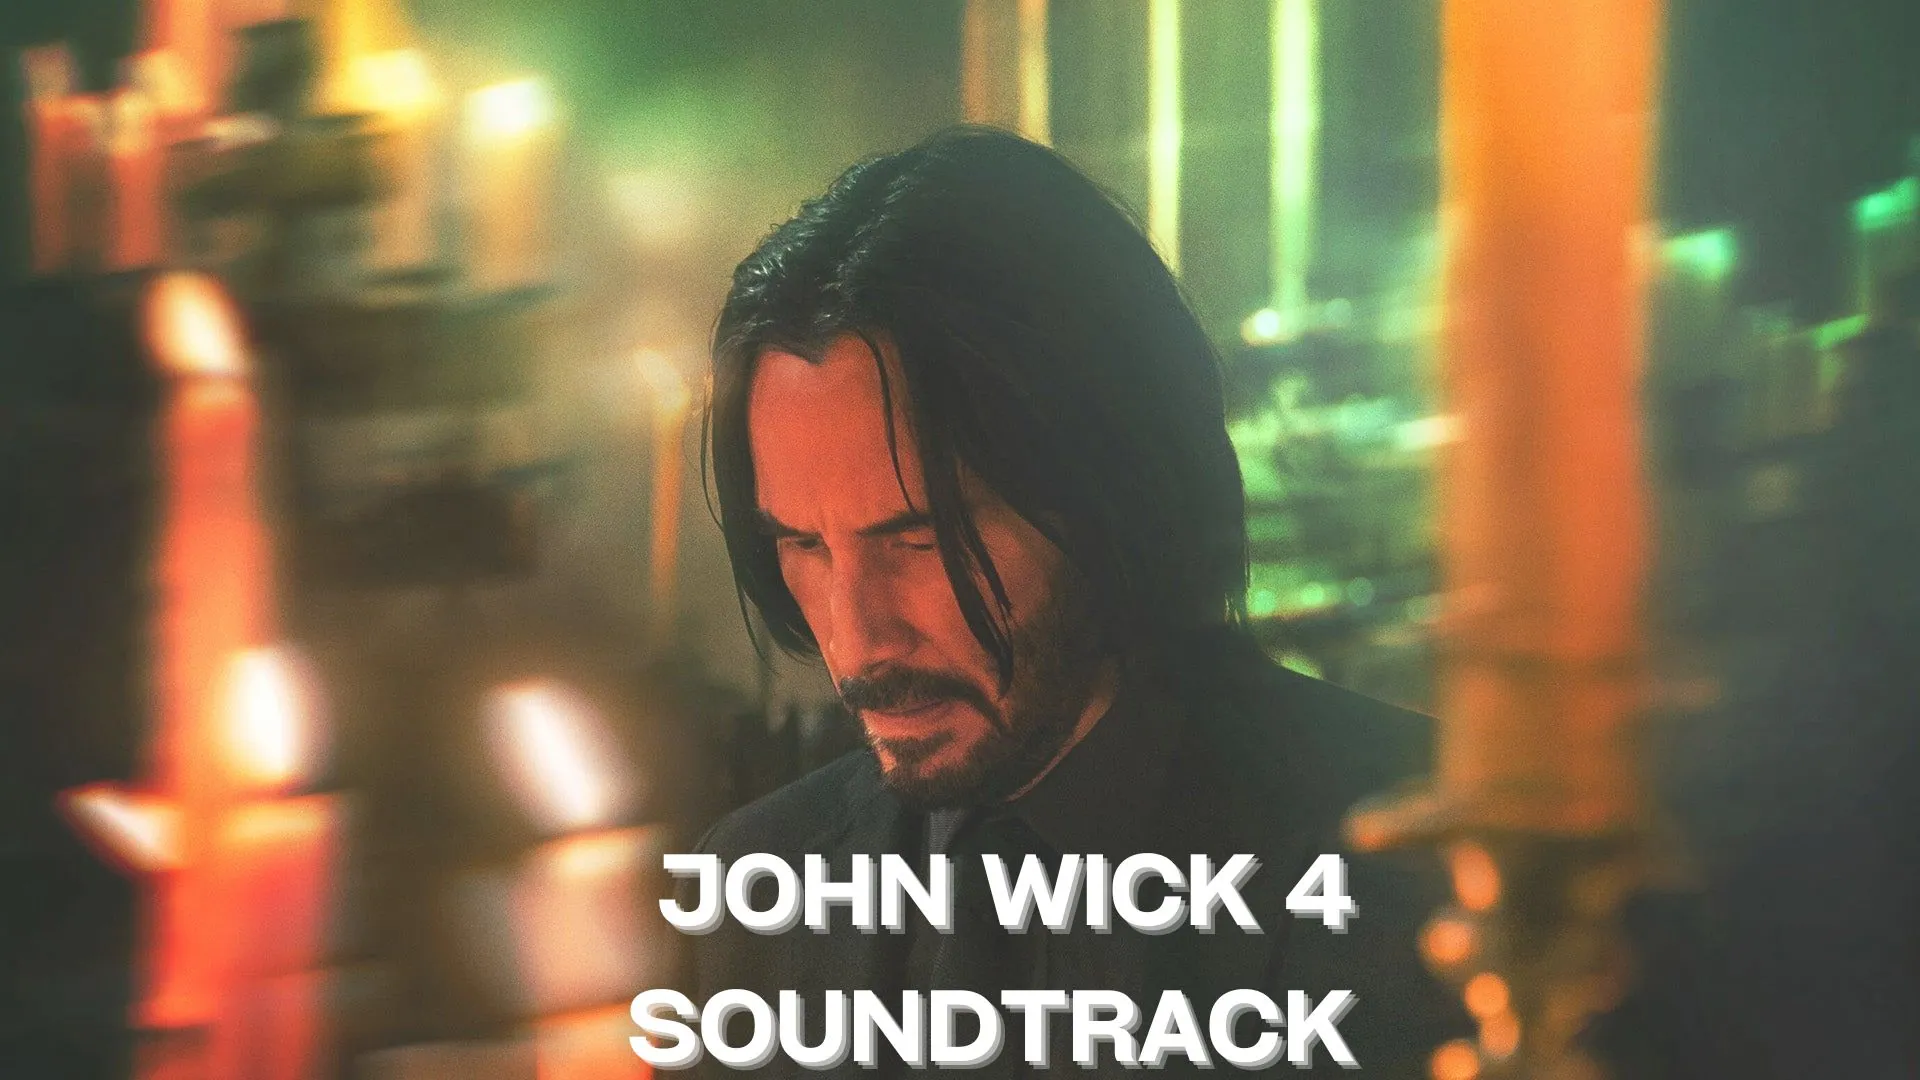 John Wick 4 Soundtrack